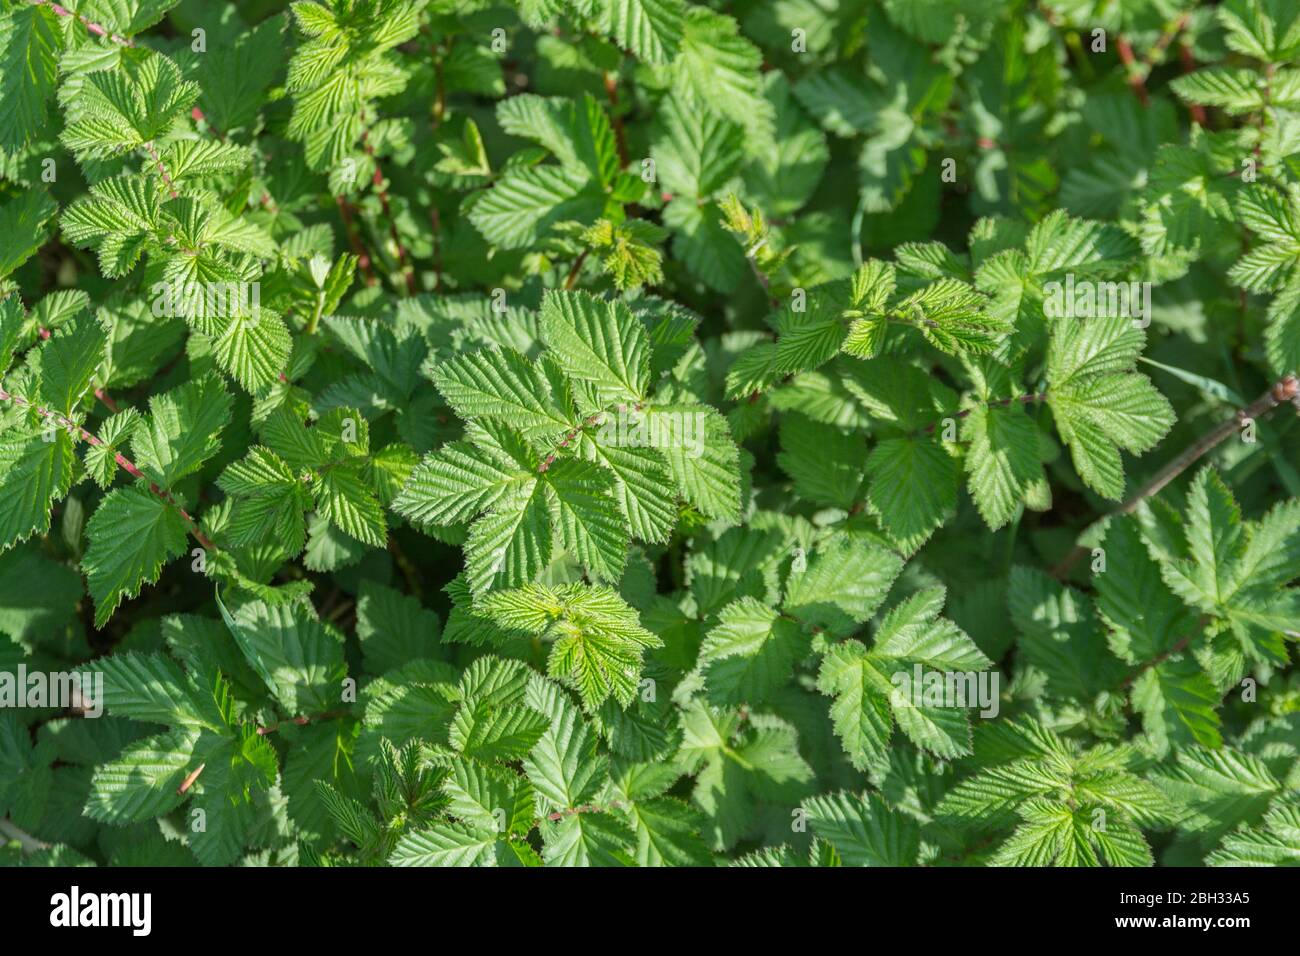 Meadowsweet / Filipendula ulmaria leaves in Spring sunshine. Medicinal plant used in herbal medicine & herbal remedies for its analgesic properties. Stock Photo